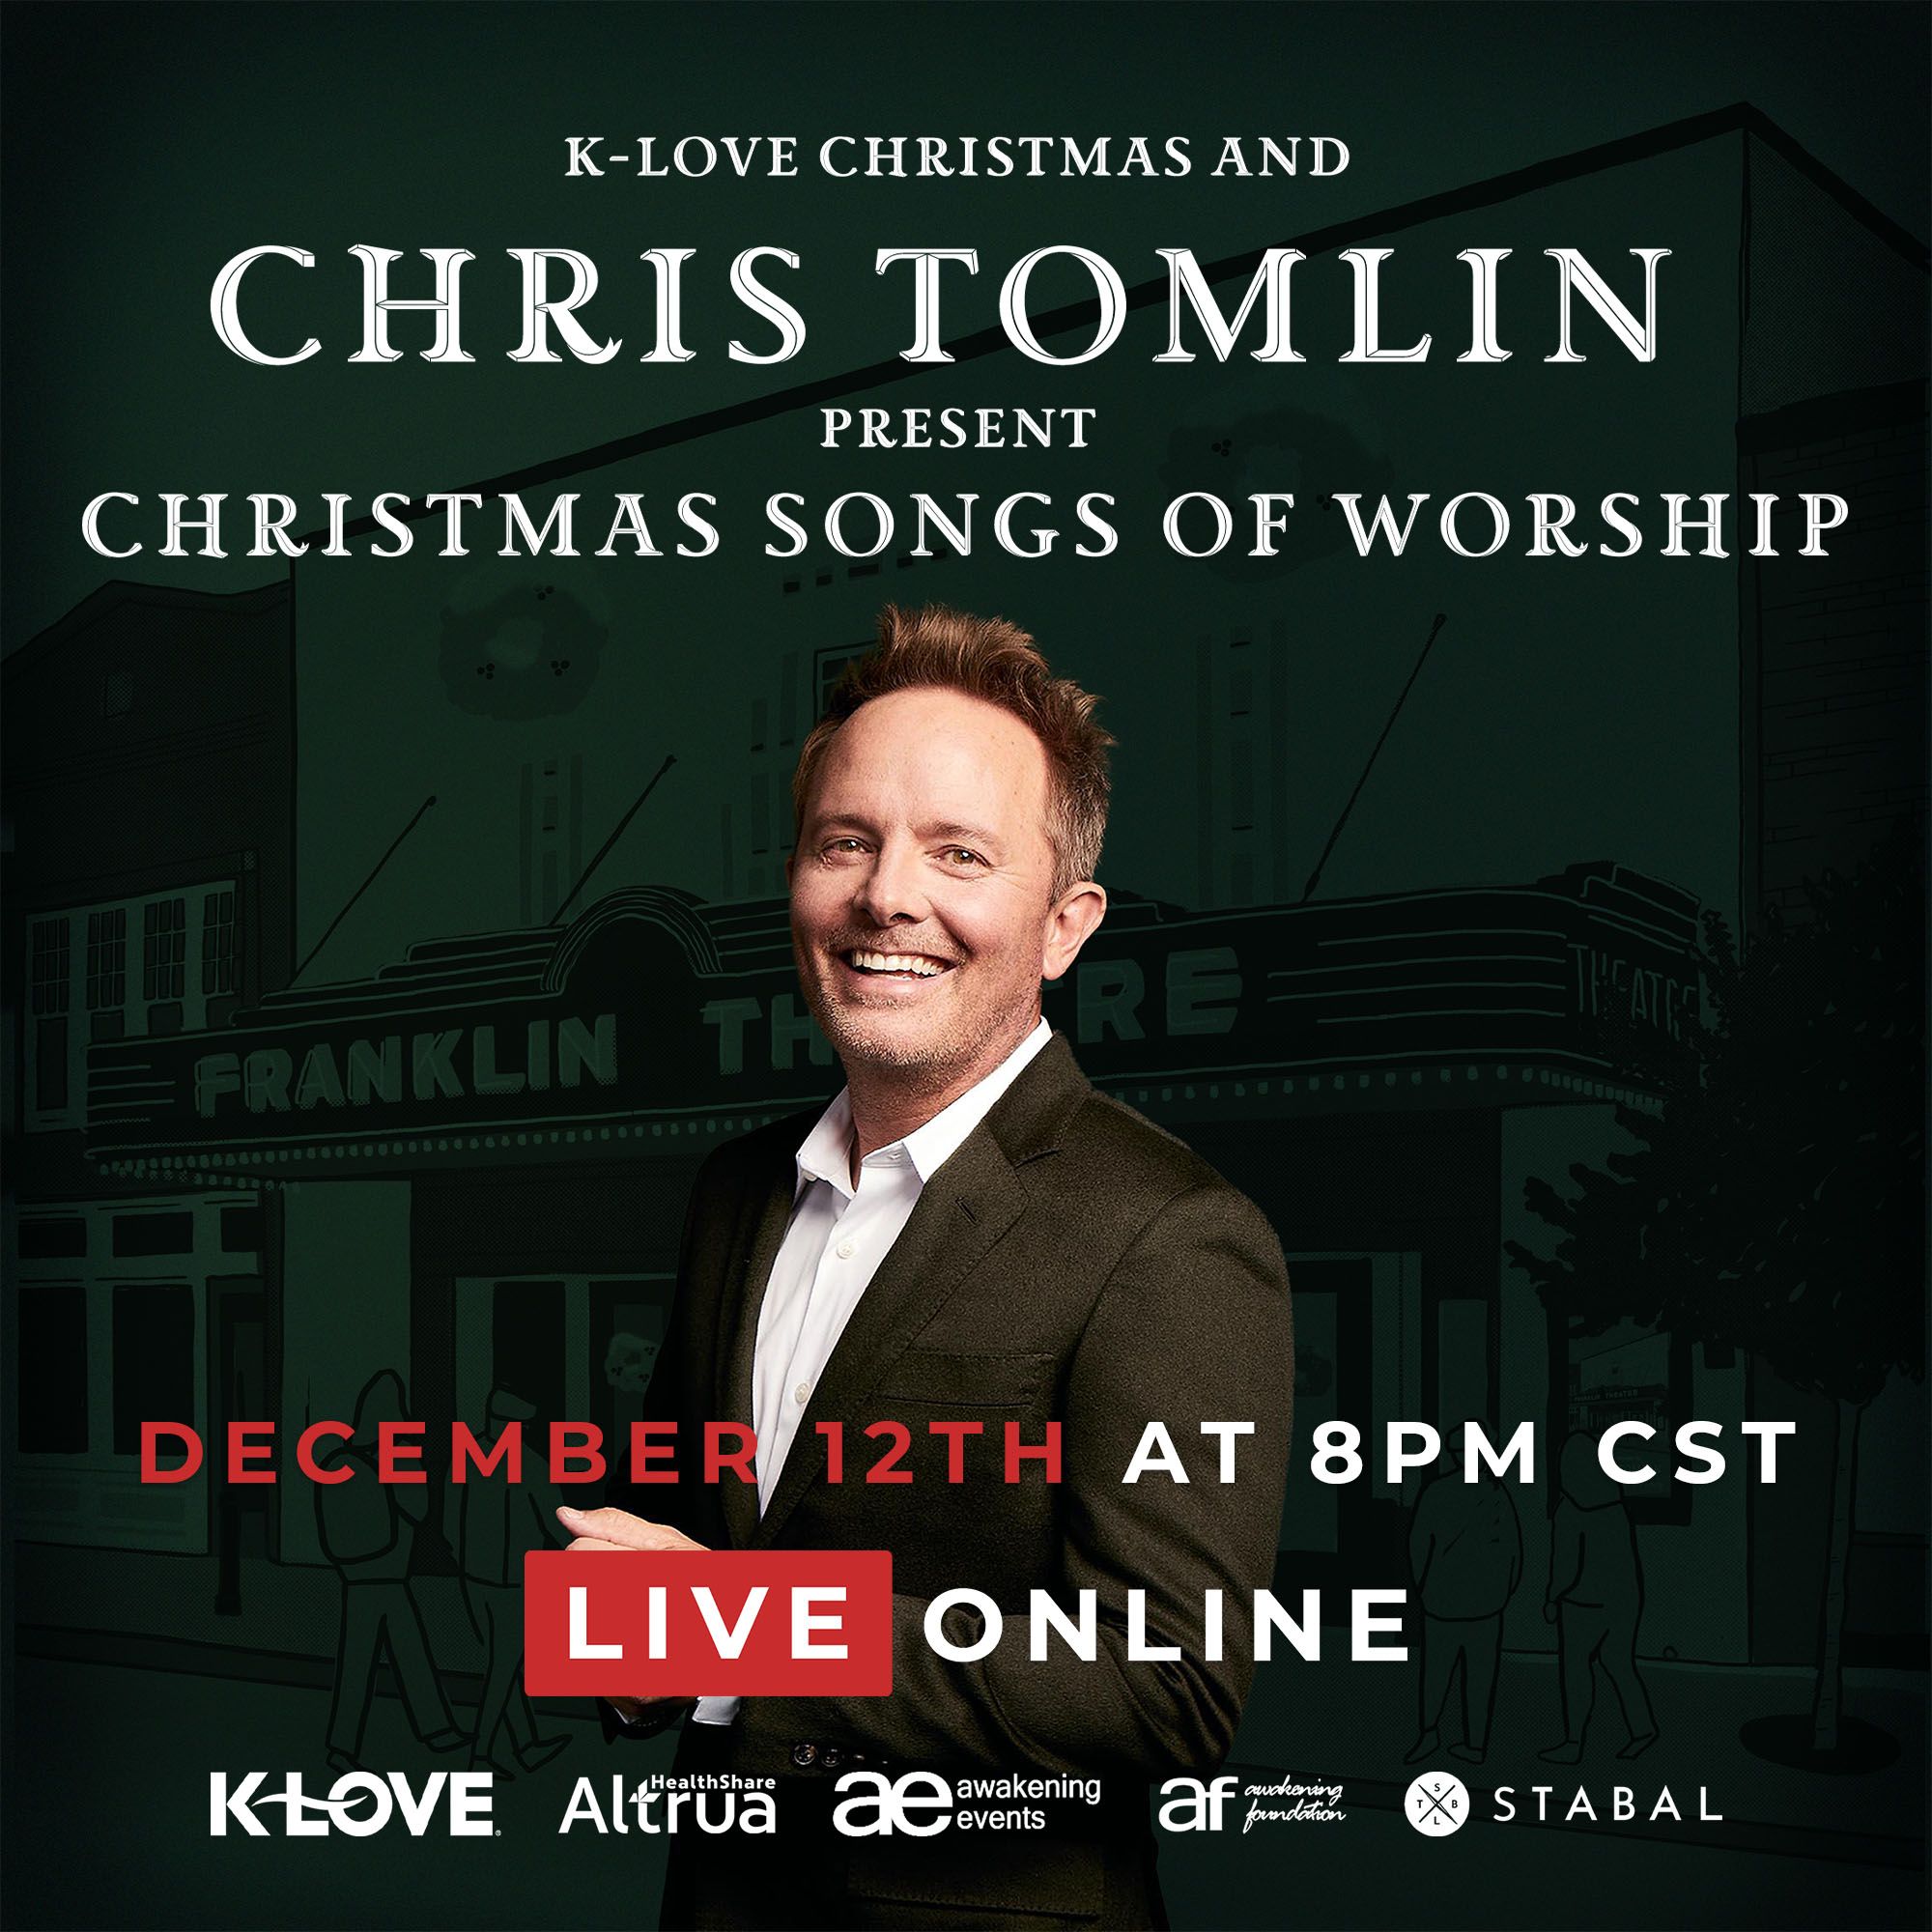 K-LOVE Christmas and Chris Tomlin Present 'Christmas Songs of Worship' Live Online Concert